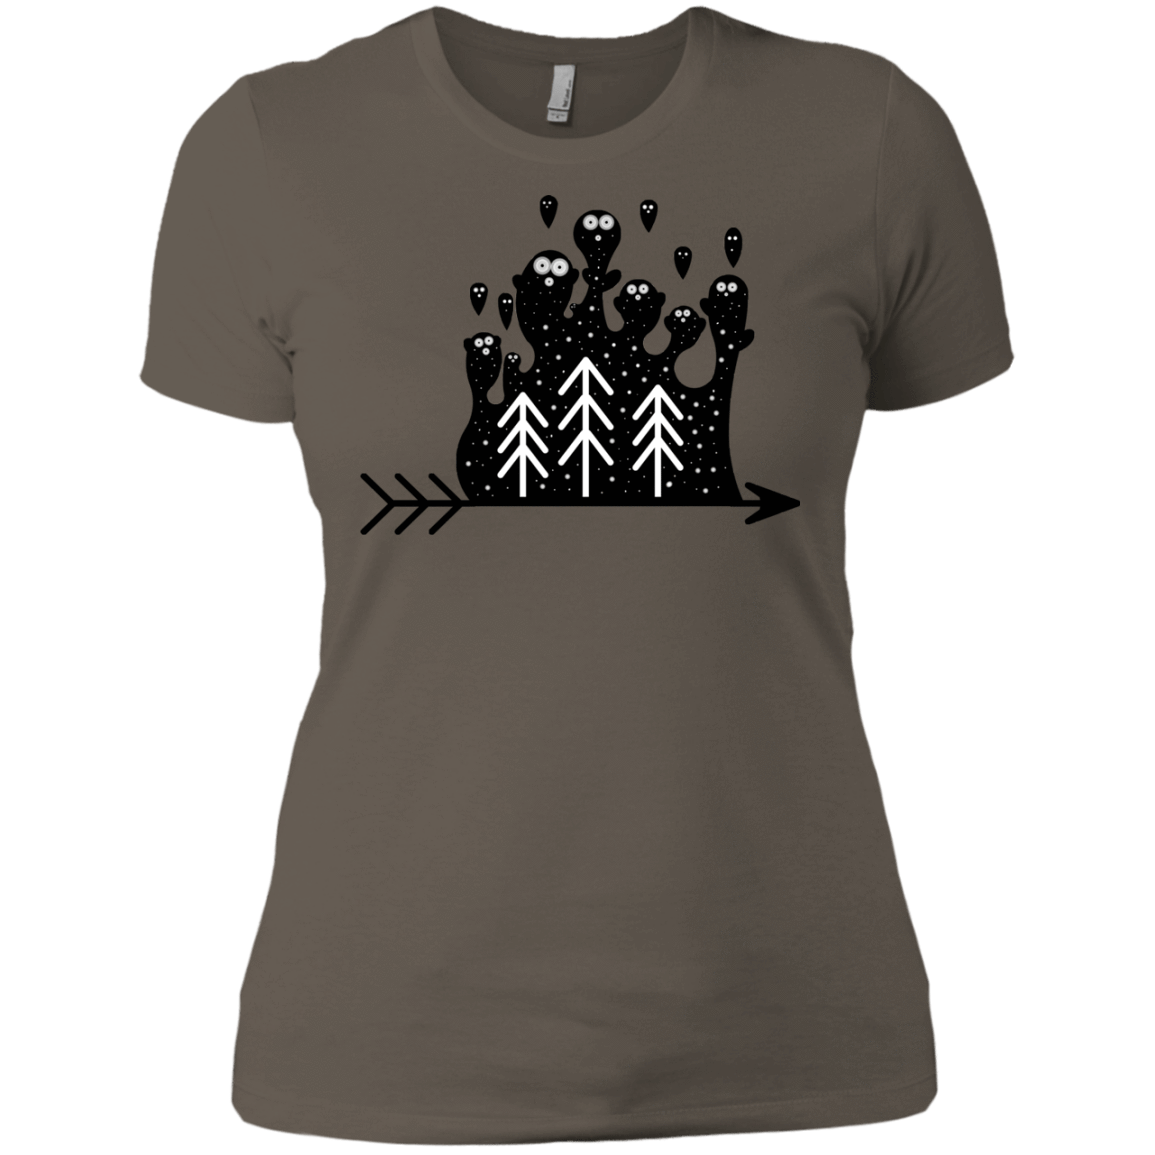 T-Shirts Warm Grey / X-Small Night Creatures Women's Premium T-Shirt